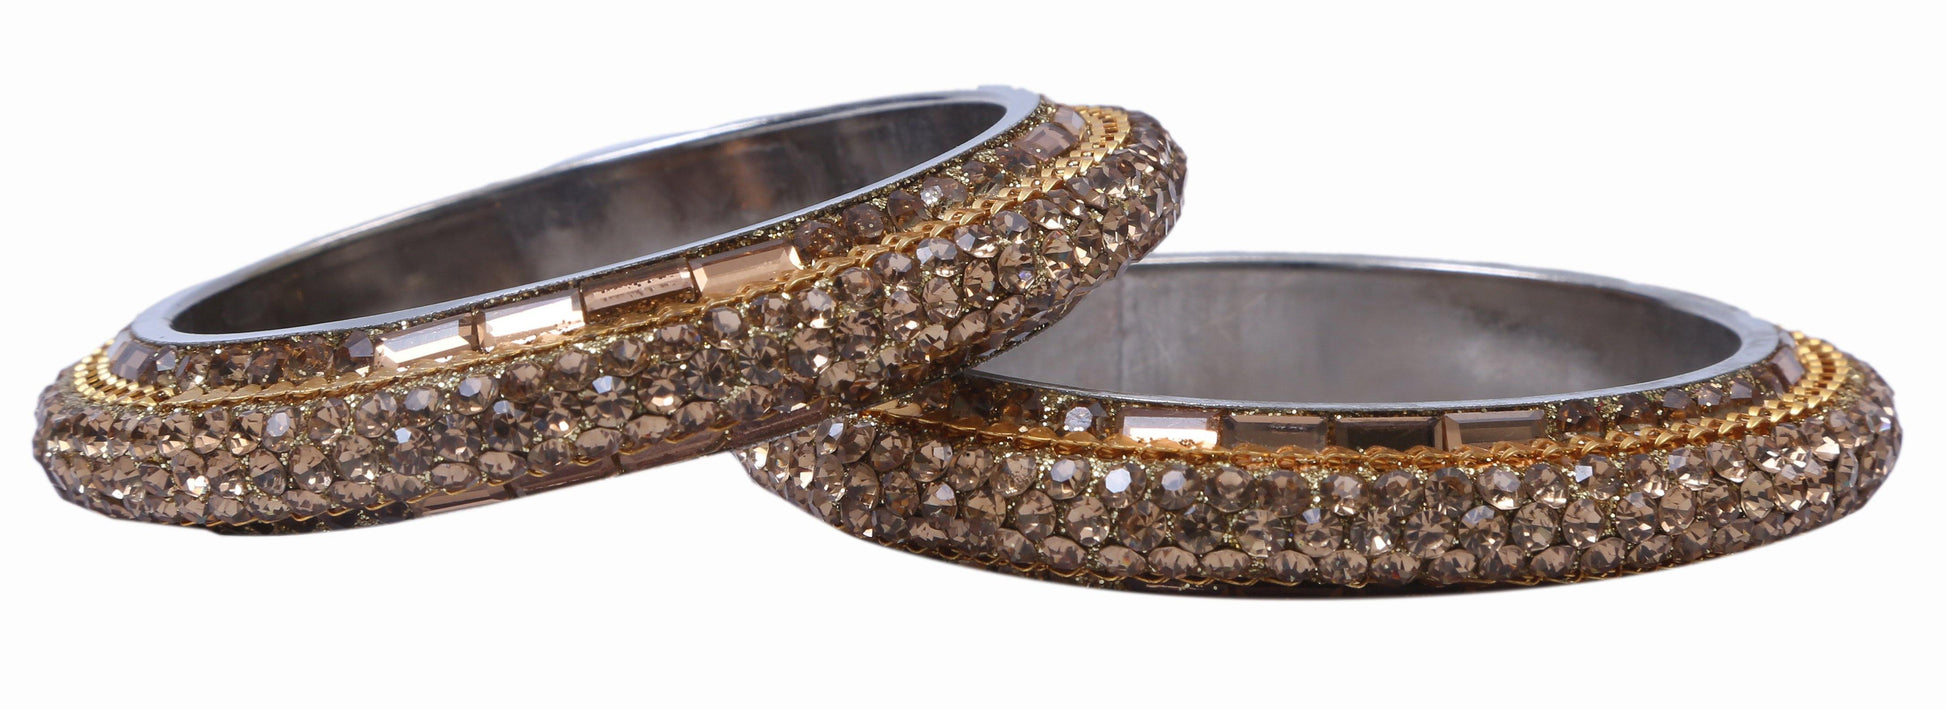 sukriti bollywood fashion stylish party-wear gold brass bangles bracelet for women & girls - set of 2